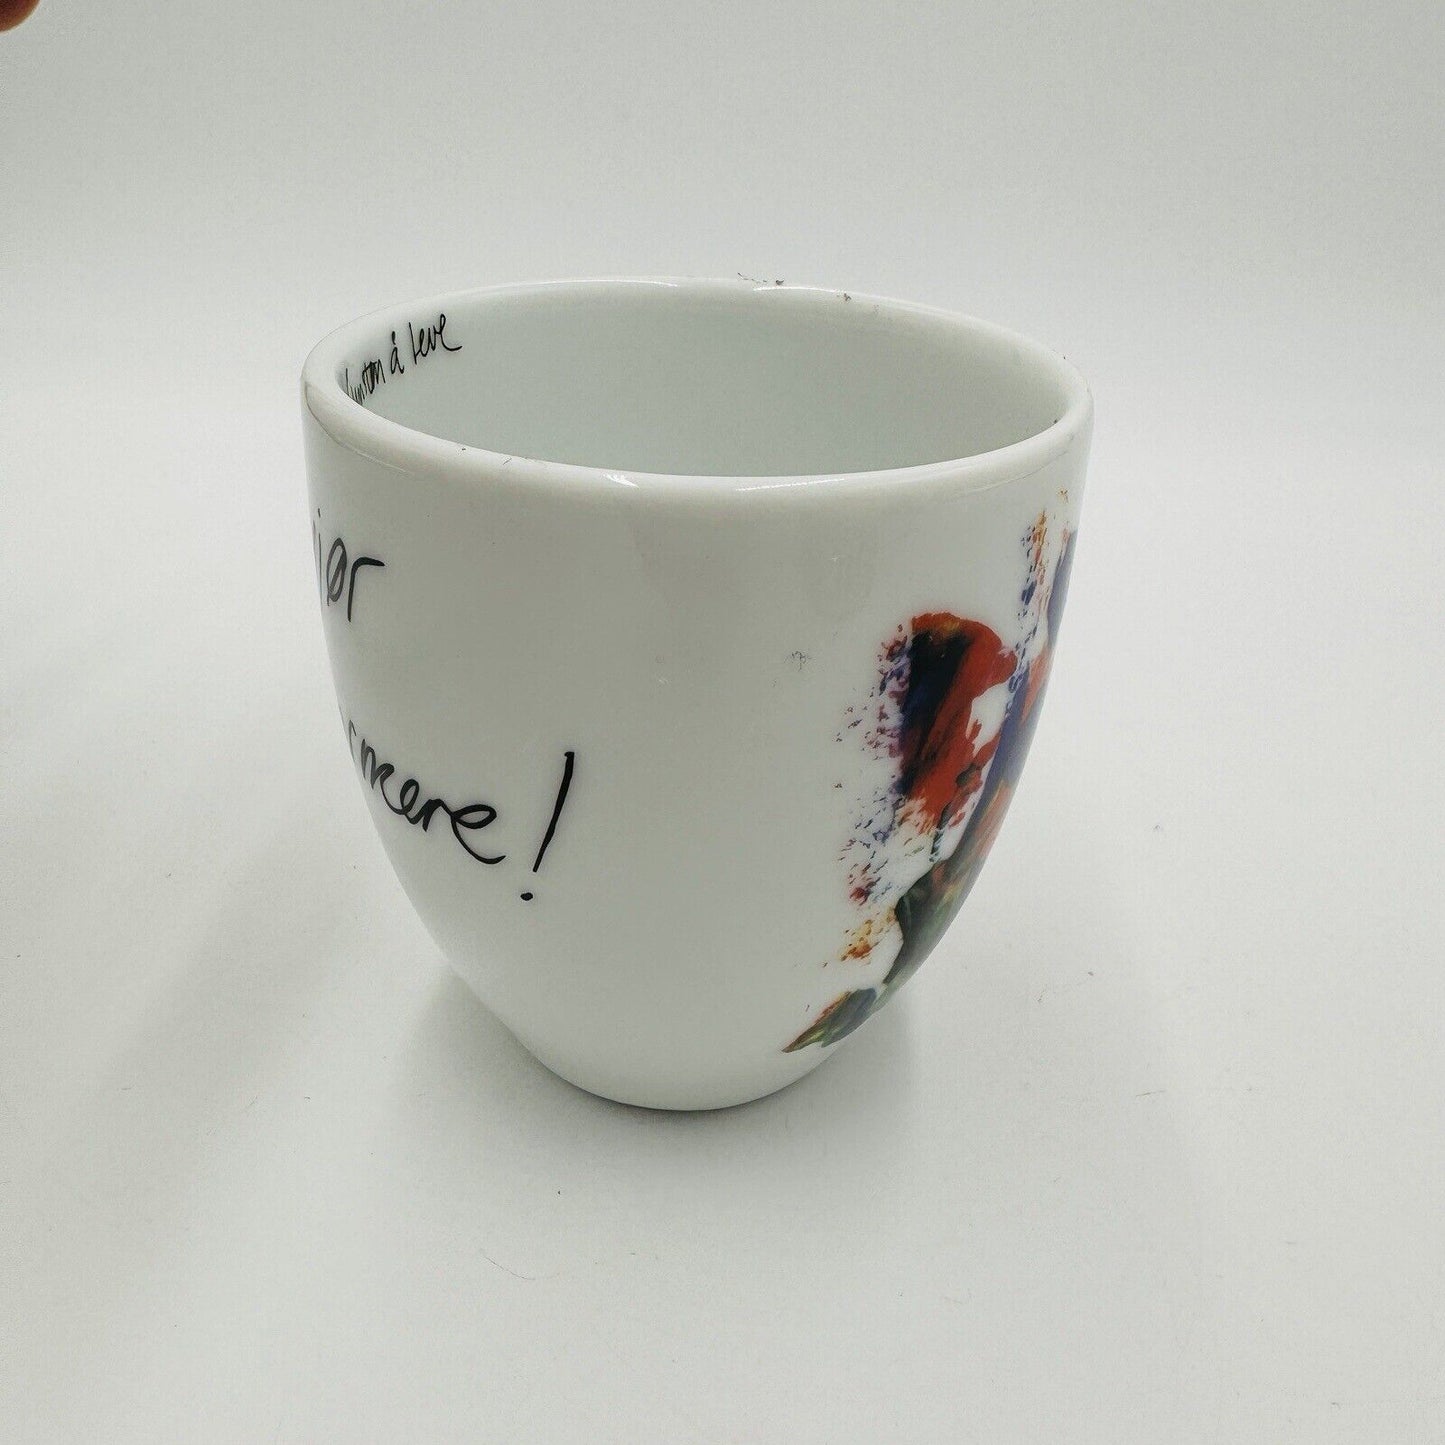 Porsgrund Porcelain Norway Colorful Painted Coffee Cup Mug